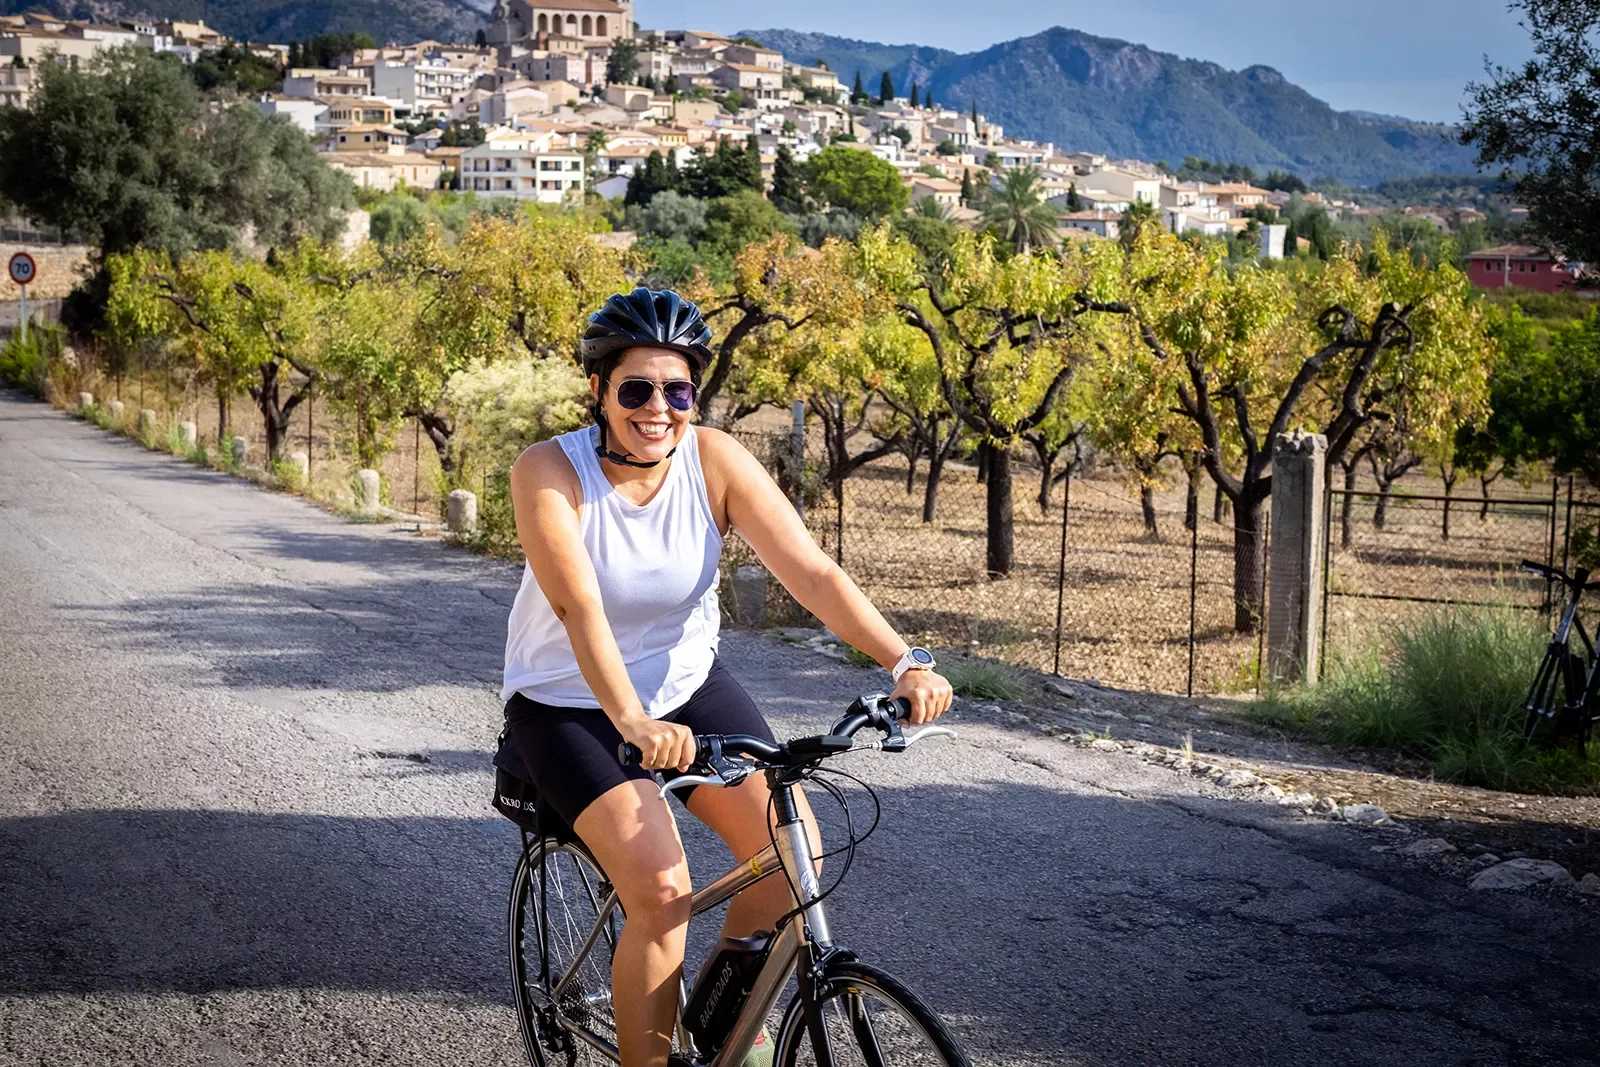 Biker riding past vineyards.